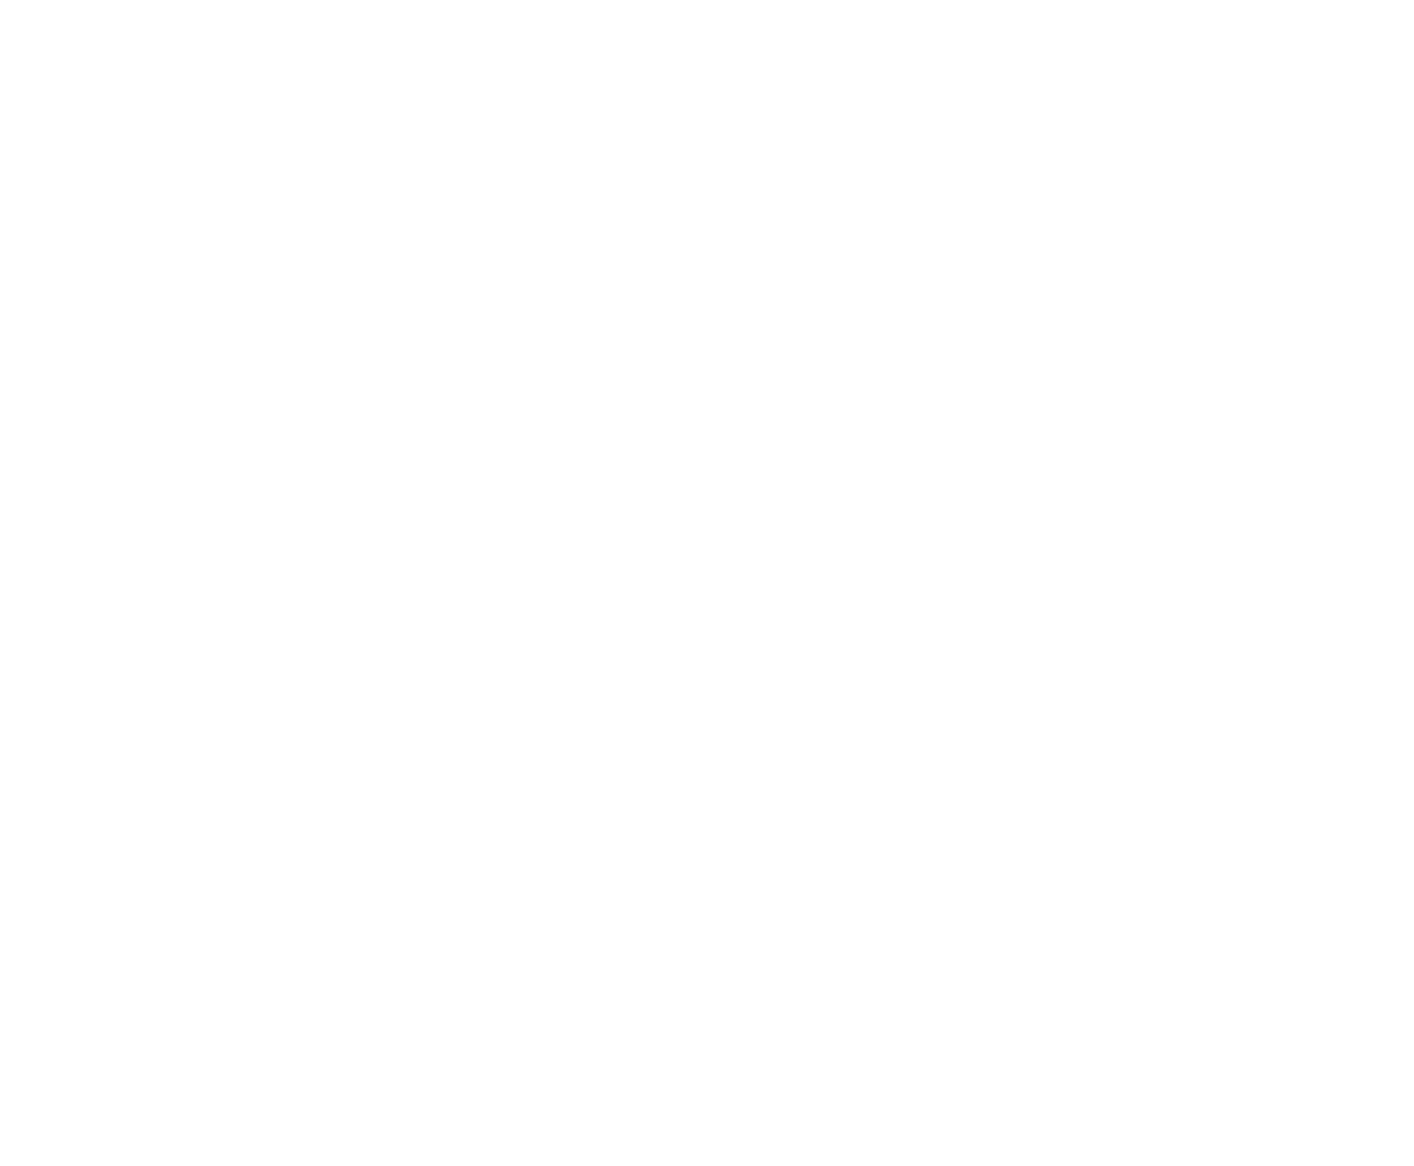 Concor Group